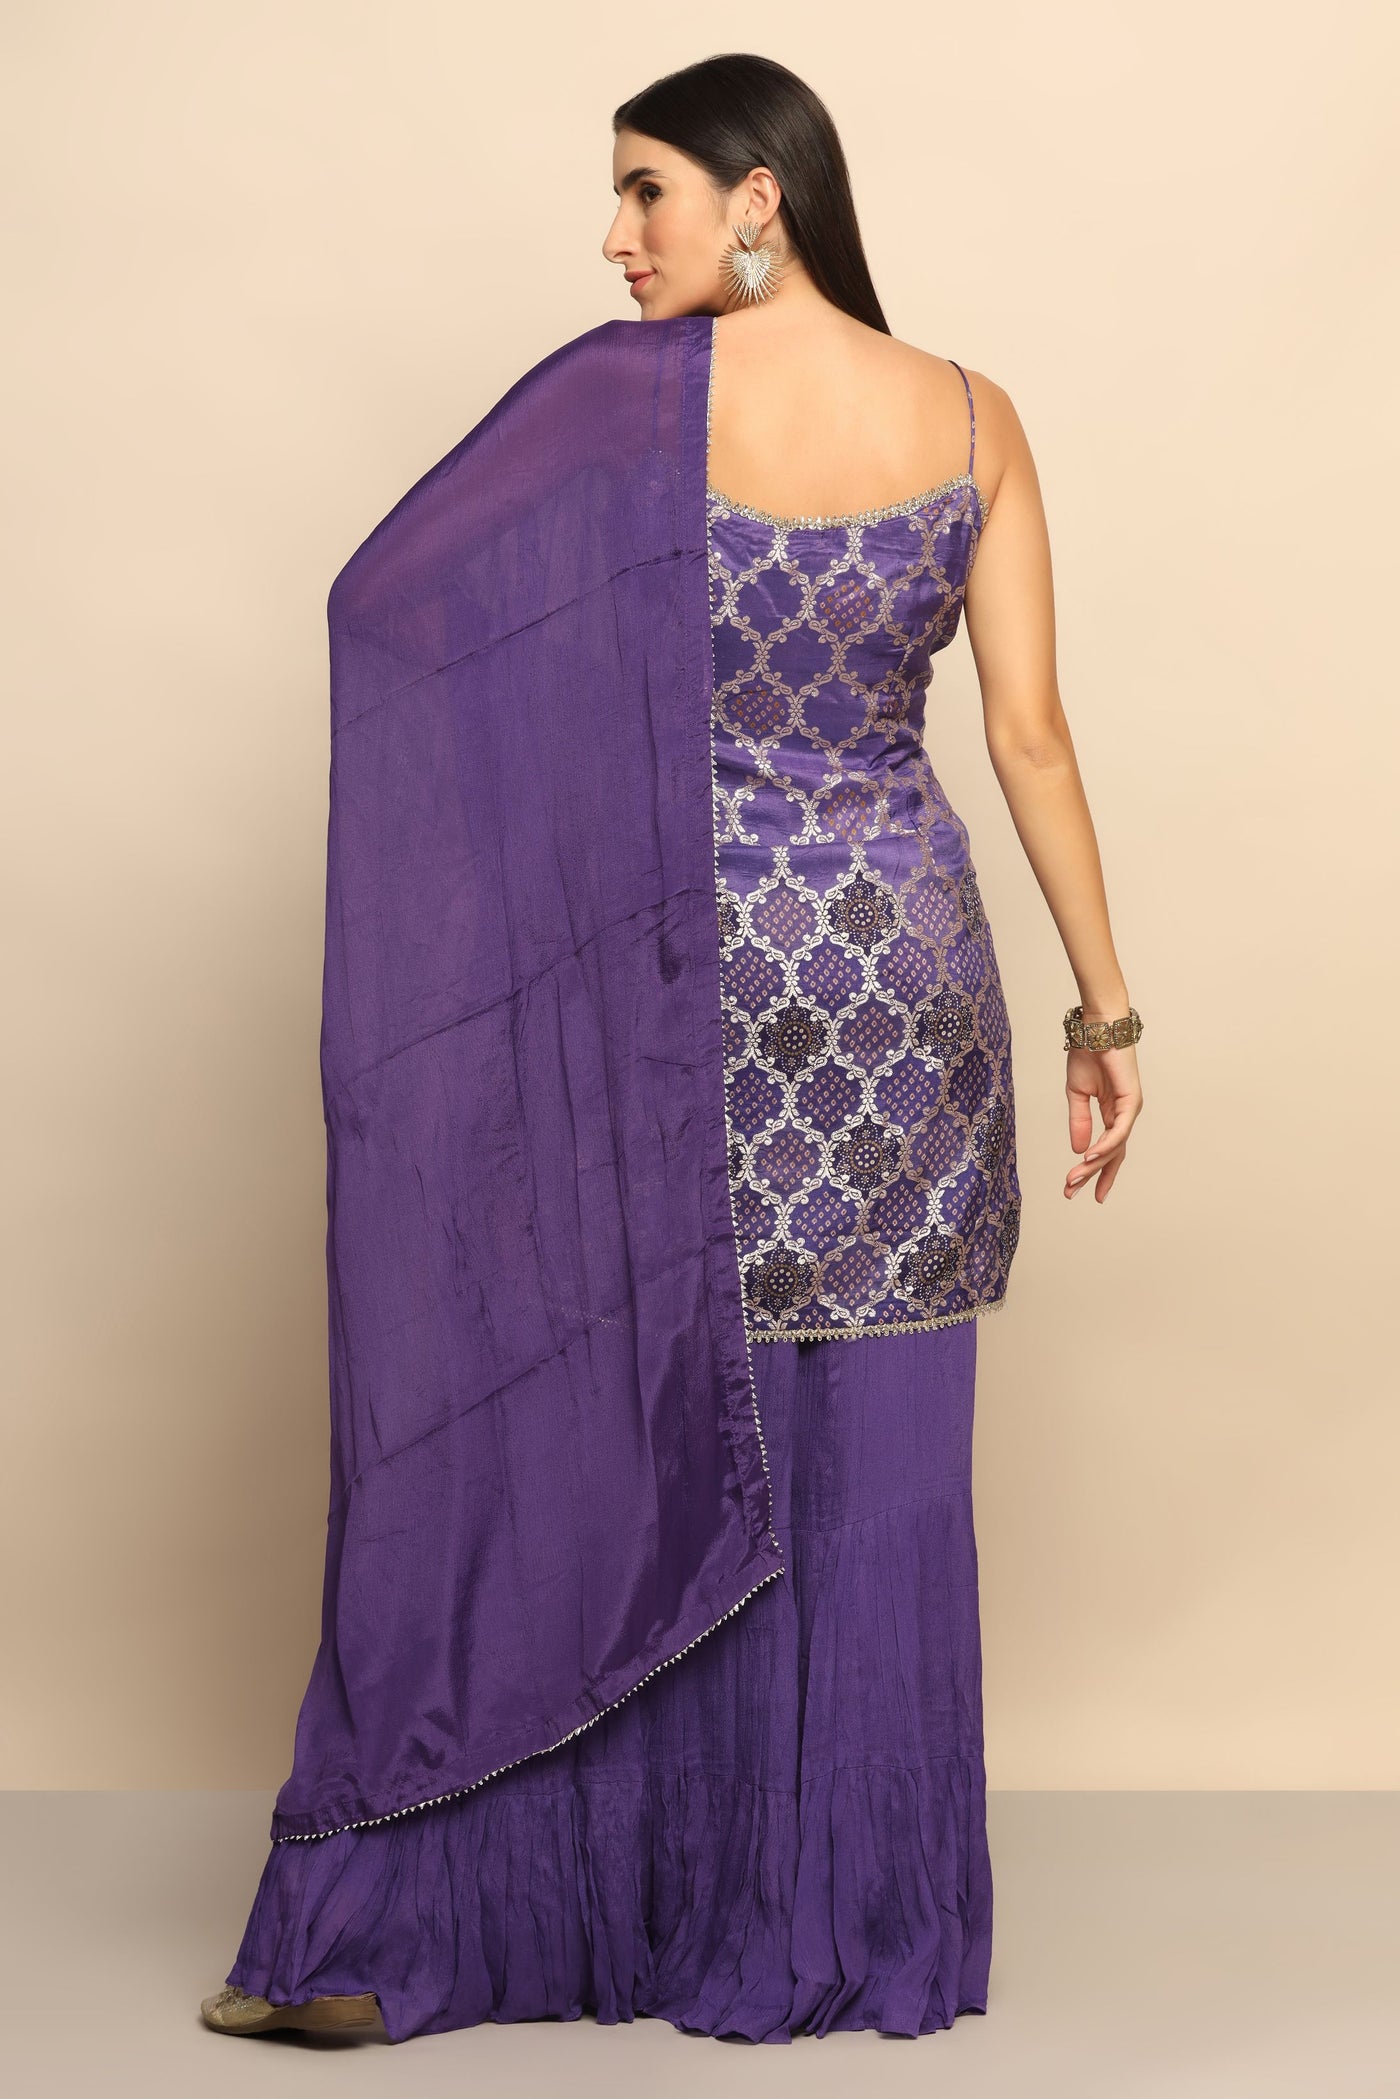 Elegant Purple Dress with Weaving Lace - Embrace Timeless Beauty